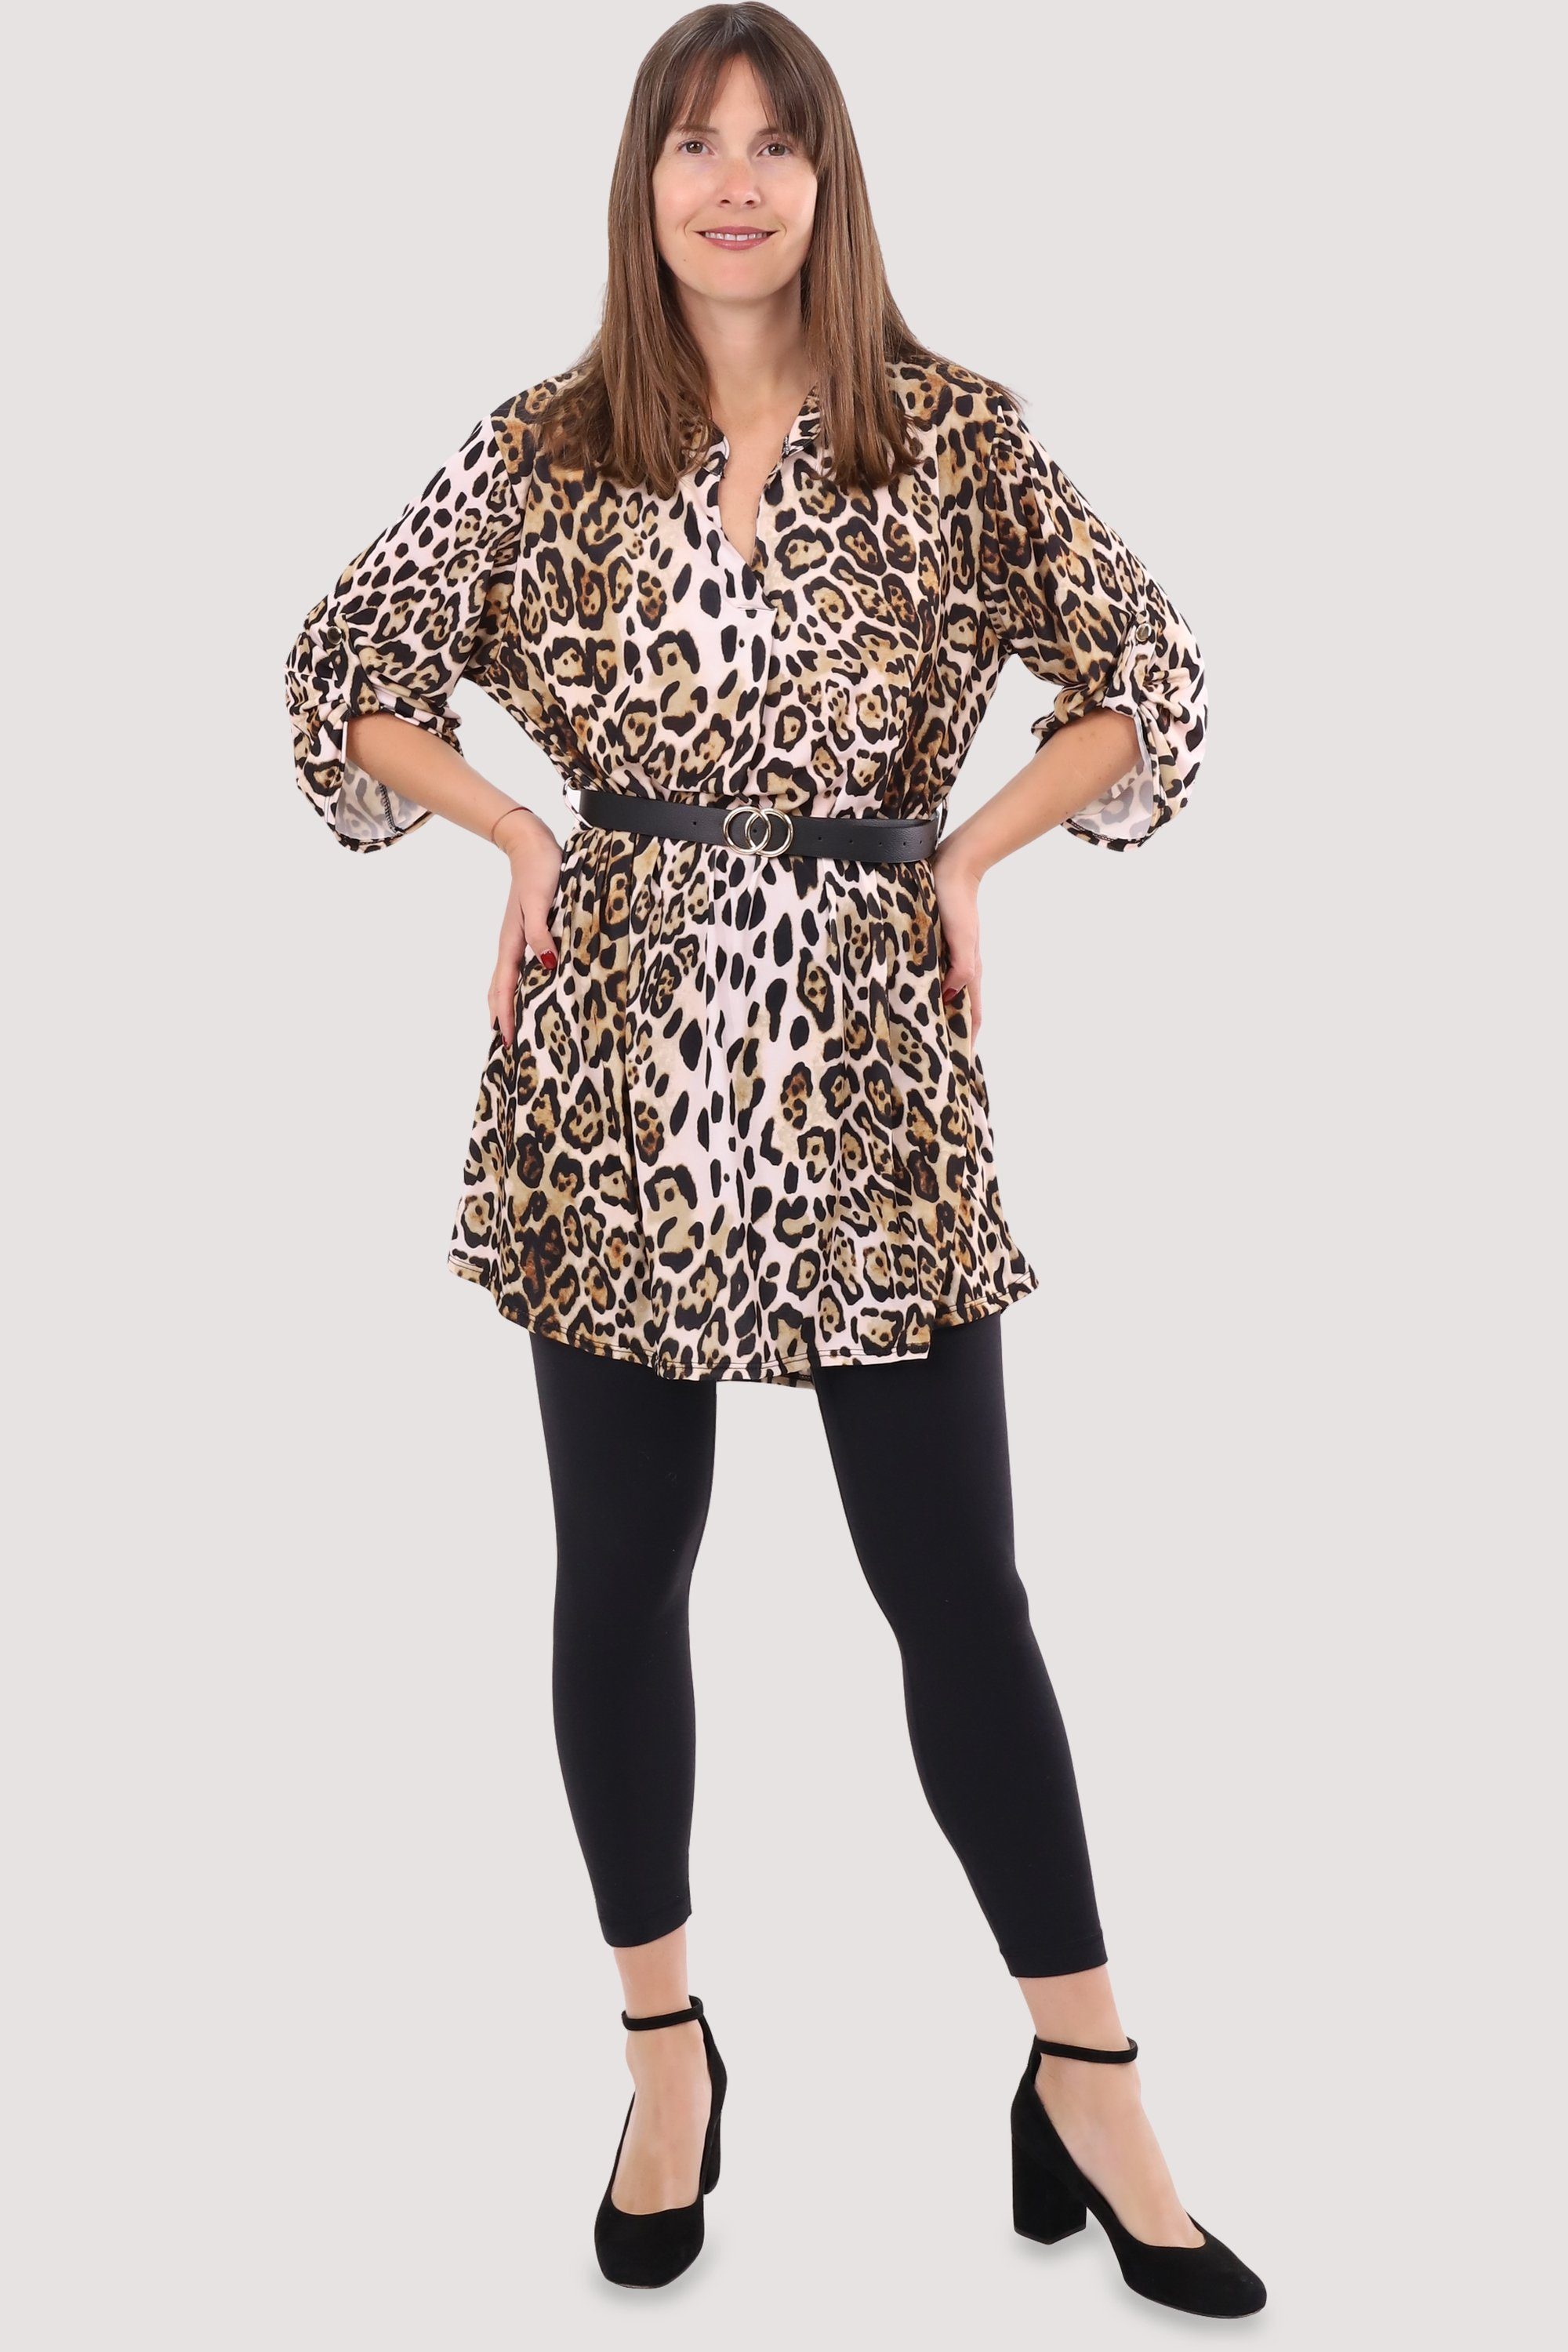 malito more Gürtel Kleid Animalprint Bluse 23203 mit Gepard Druckkleid Einheitsgröße fashion Tunika 1 than